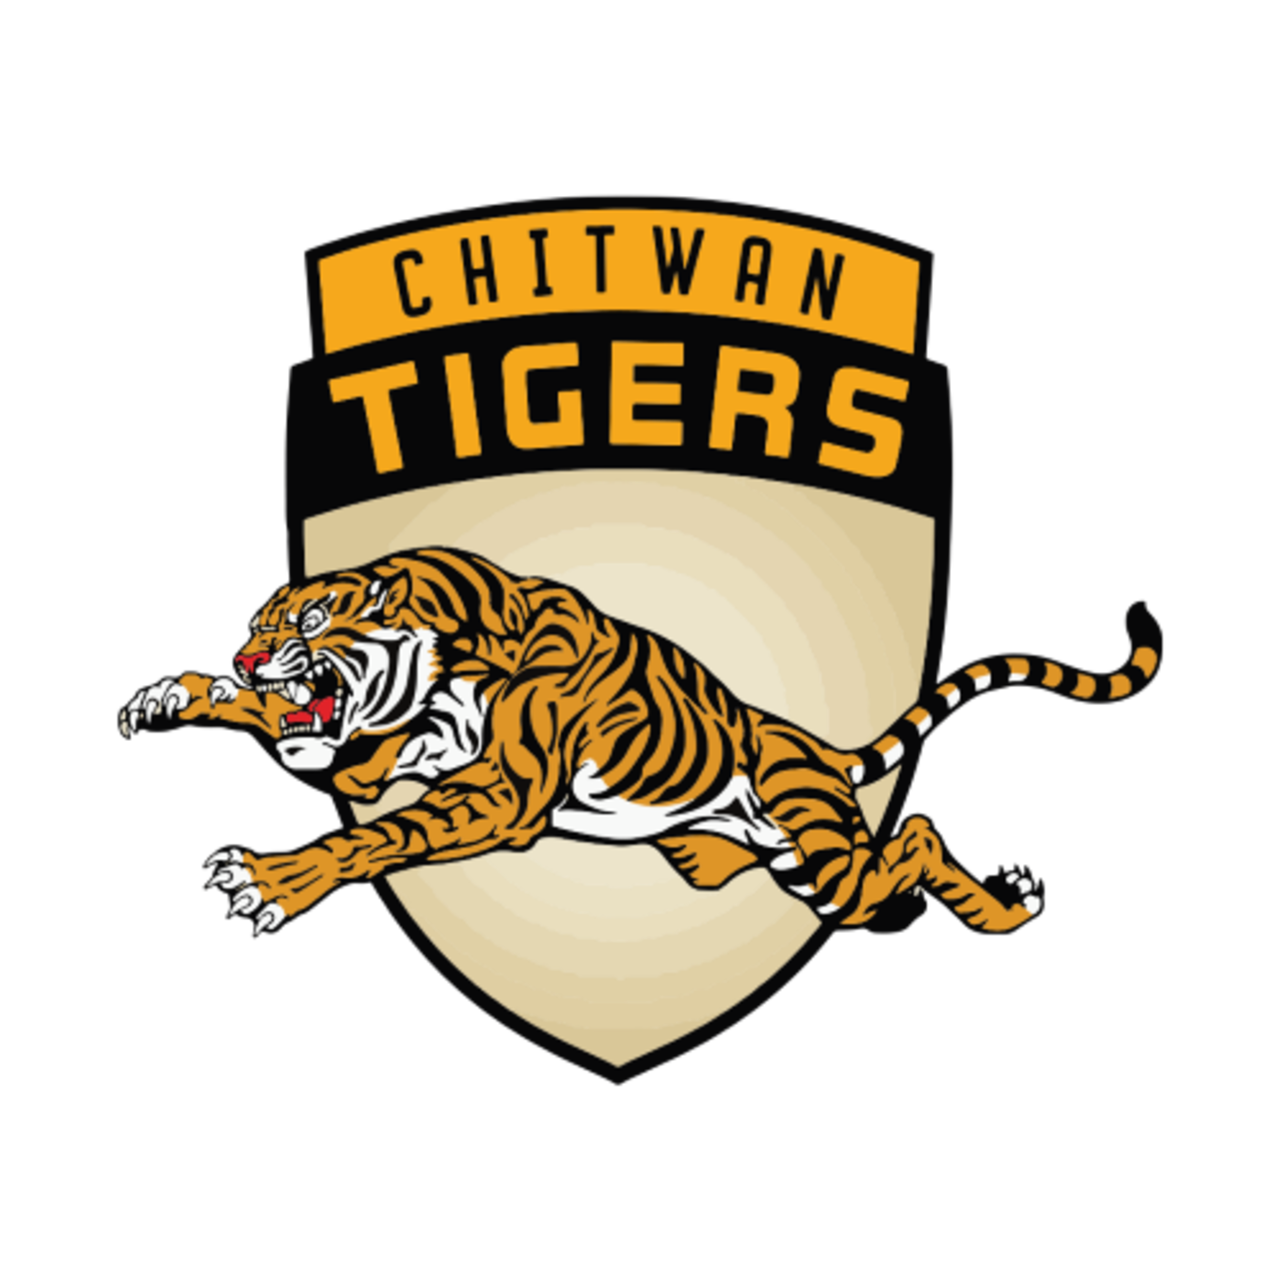 Chitwan Tigers team logo